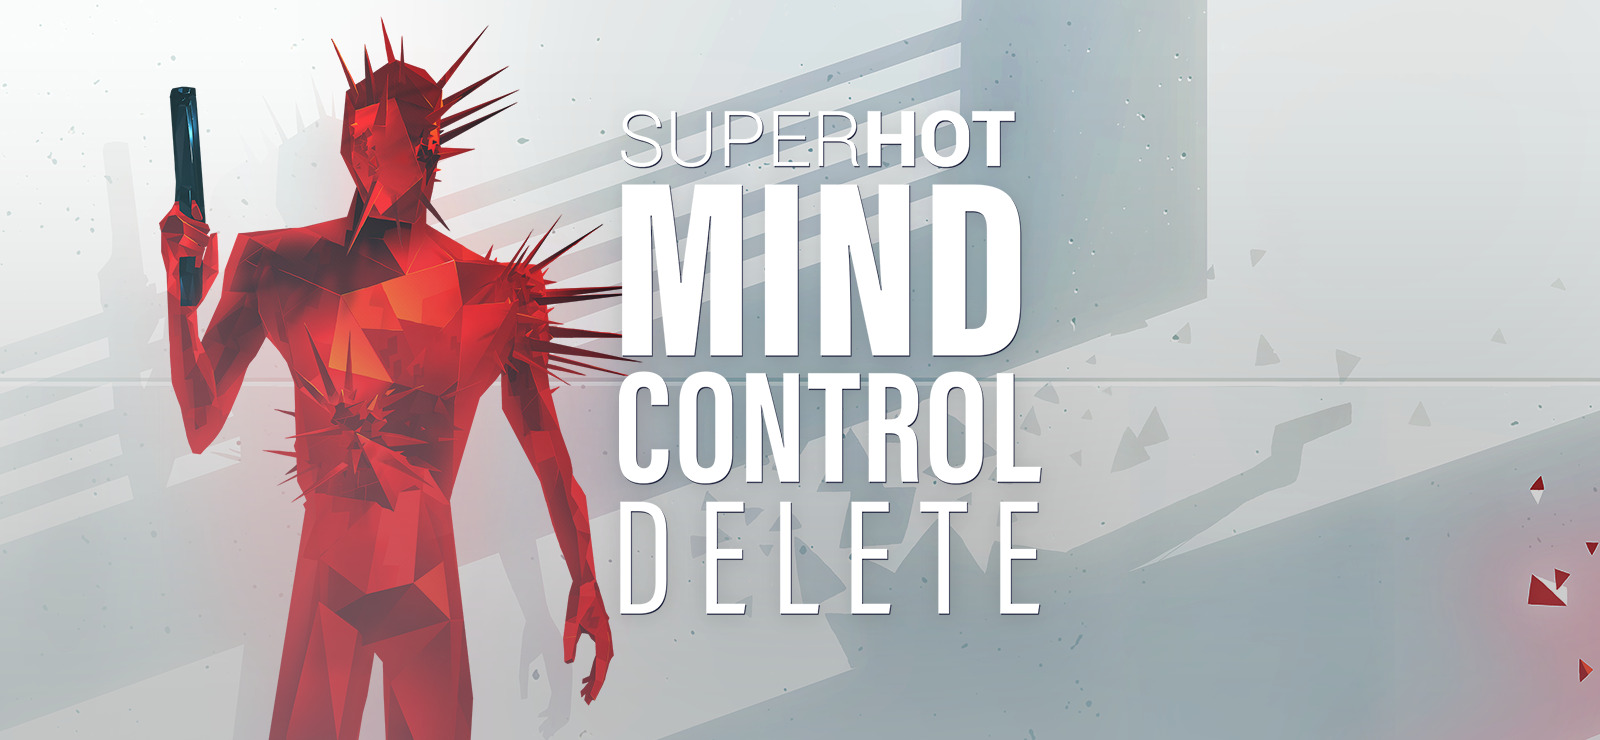 super hot mind control delete vr